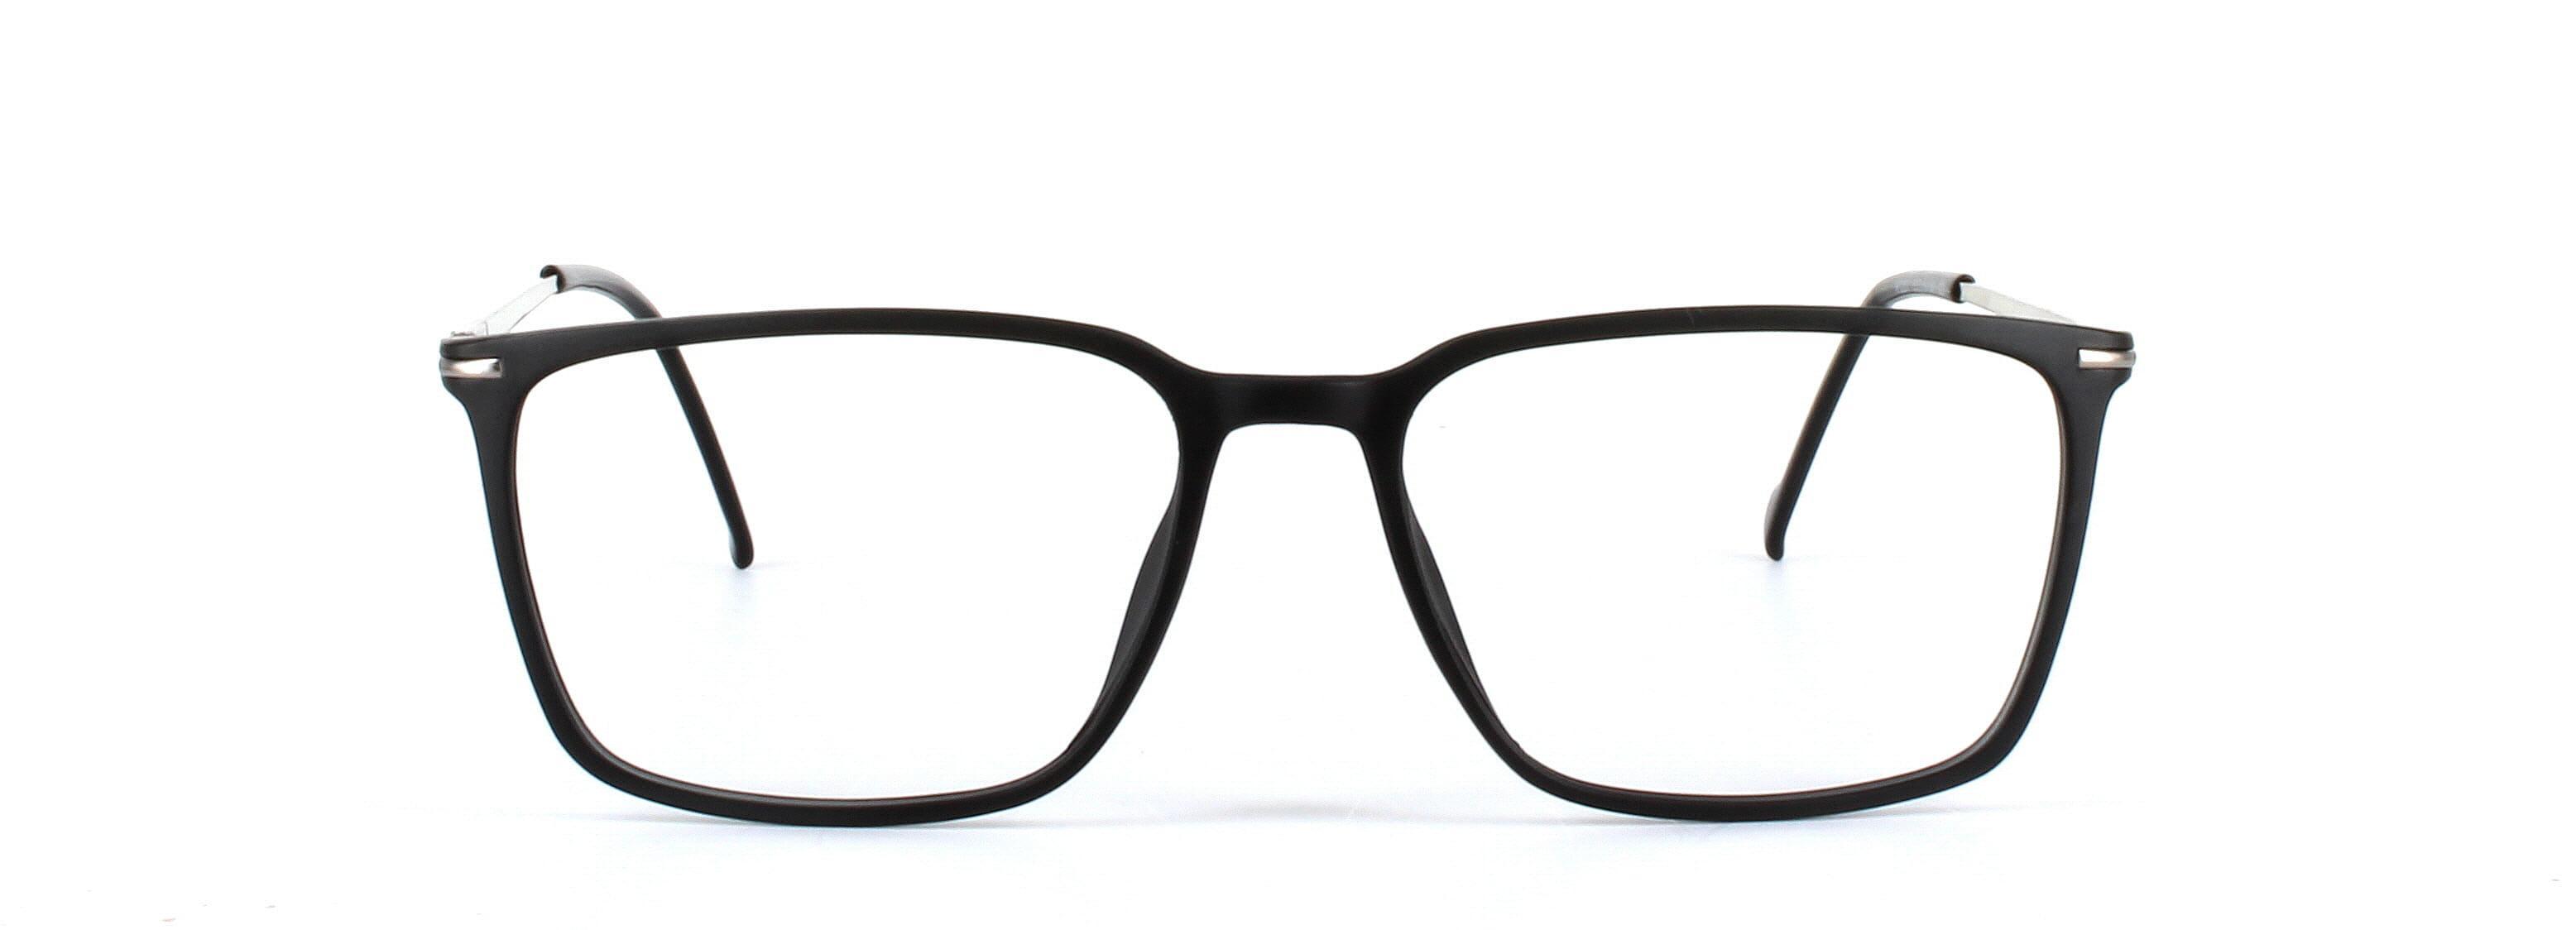 Nebraska Black Full Rim Plastic Glasses - Image View 5